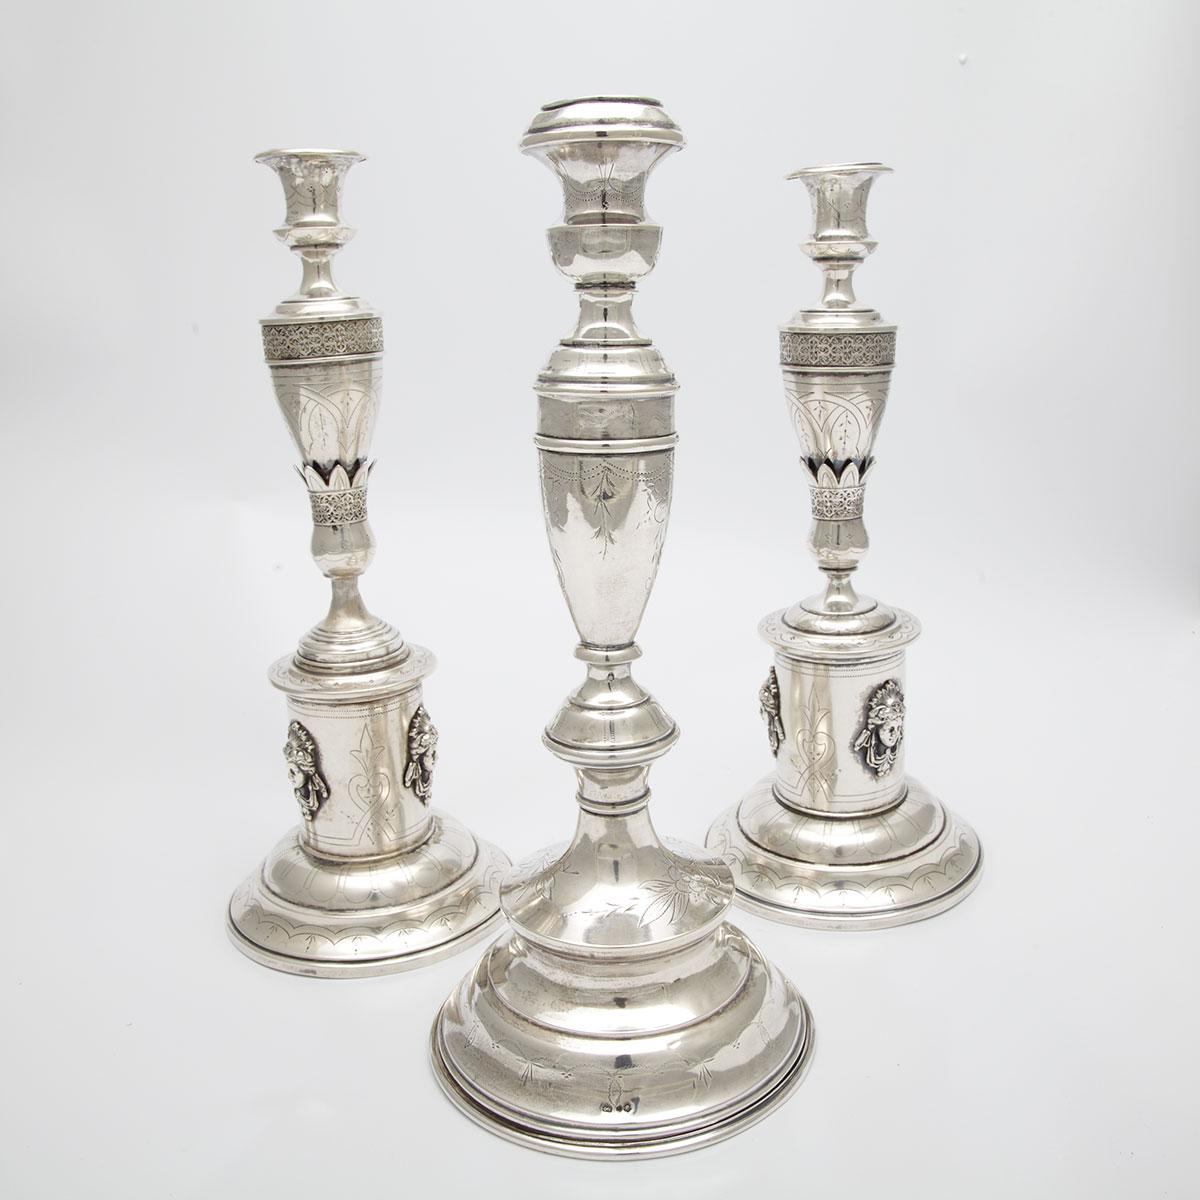 Three Austro-Hungarian Silver Candlesticks, Vienna, c.1900